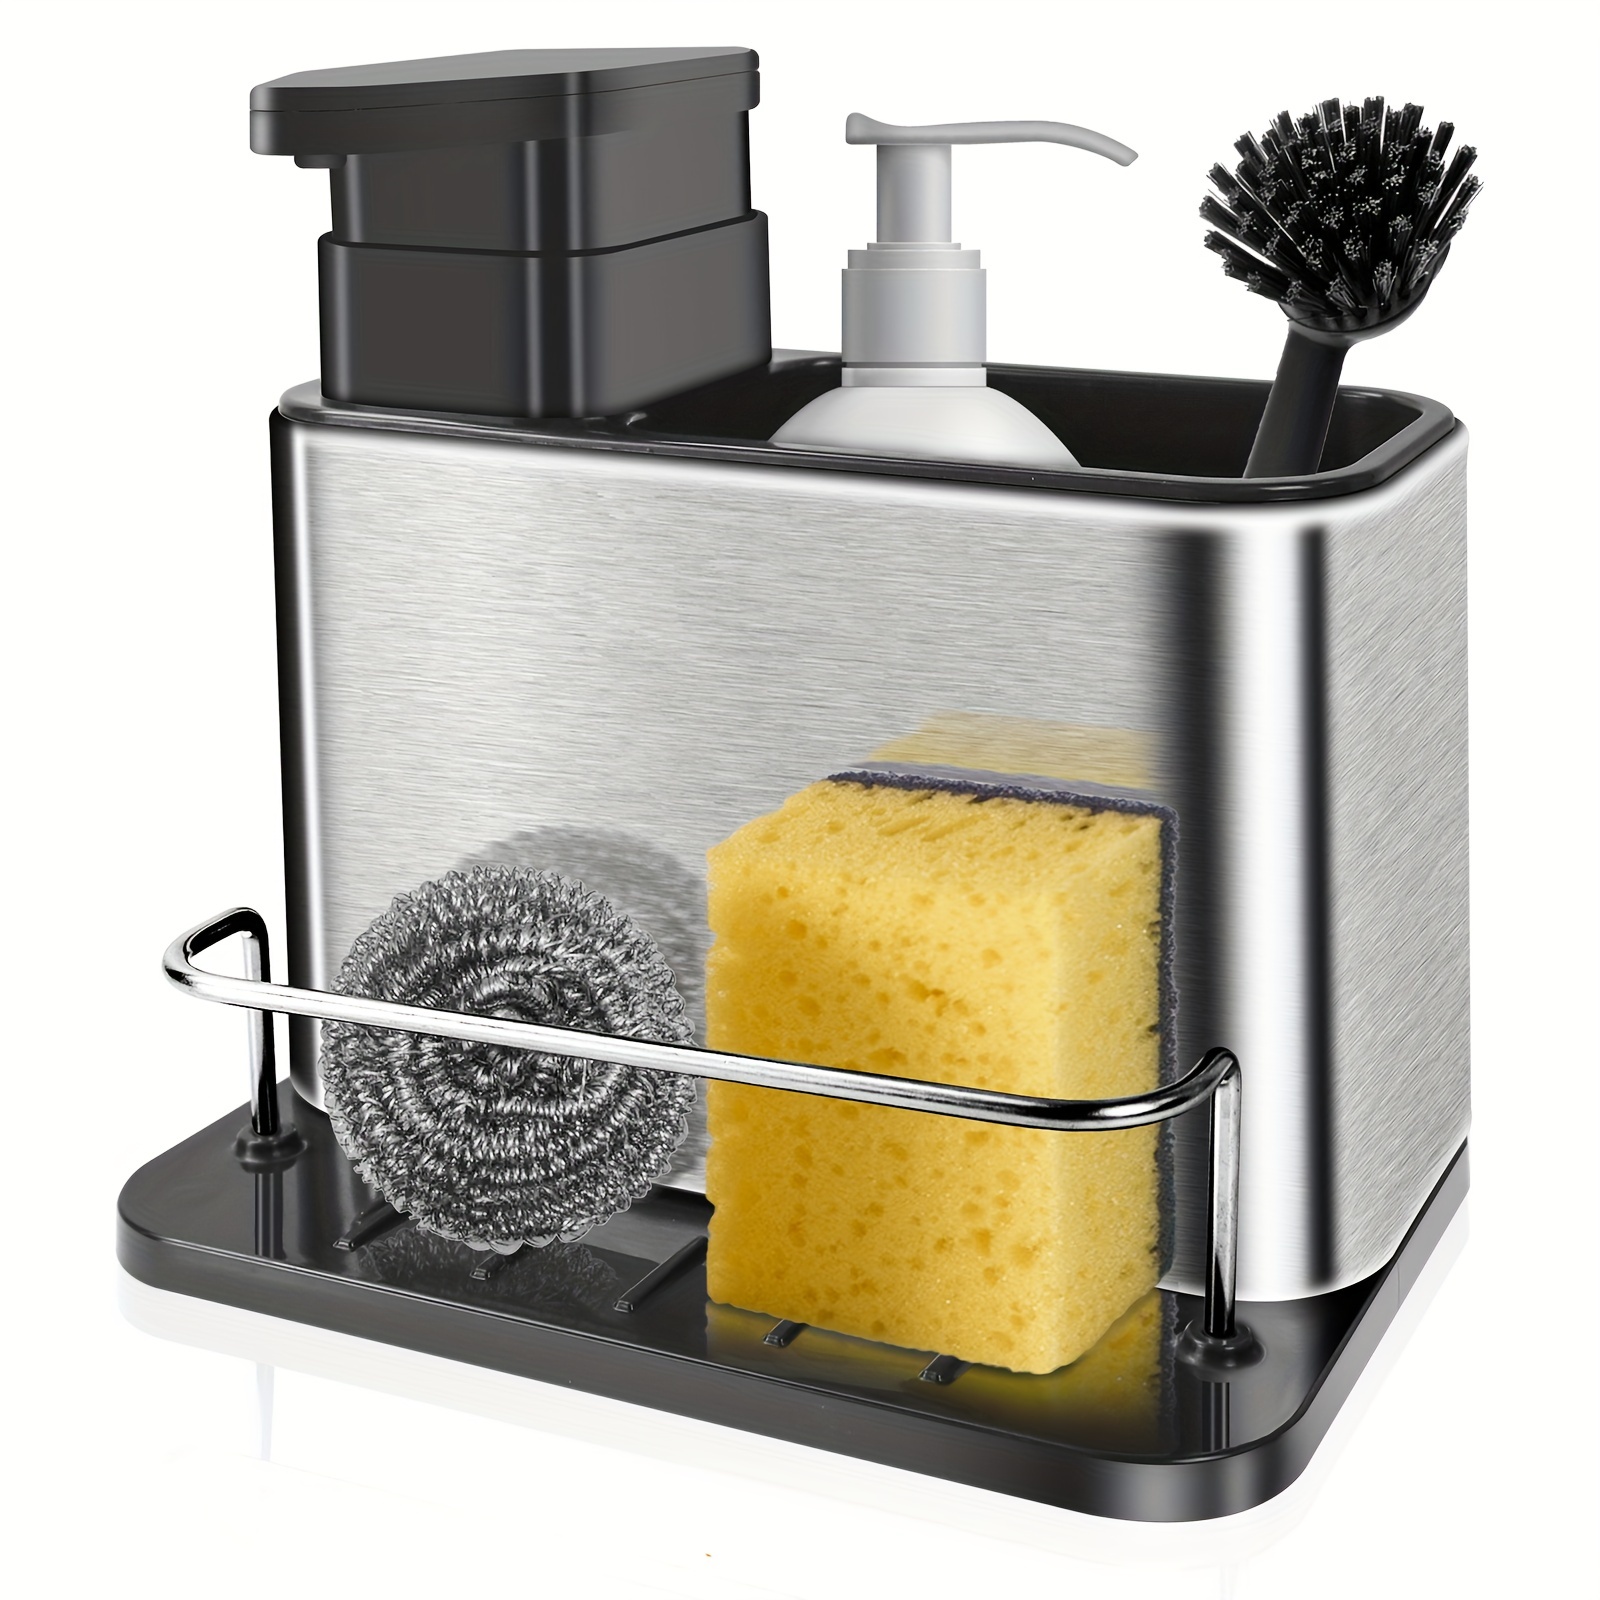 Soap Dispenser with Sponge Holder,Liquid Hand and Dish Soap Dispenser and  Spong Caddy with Brush Holder 3 in 1 Countertop Organizer for Kitchen Sink